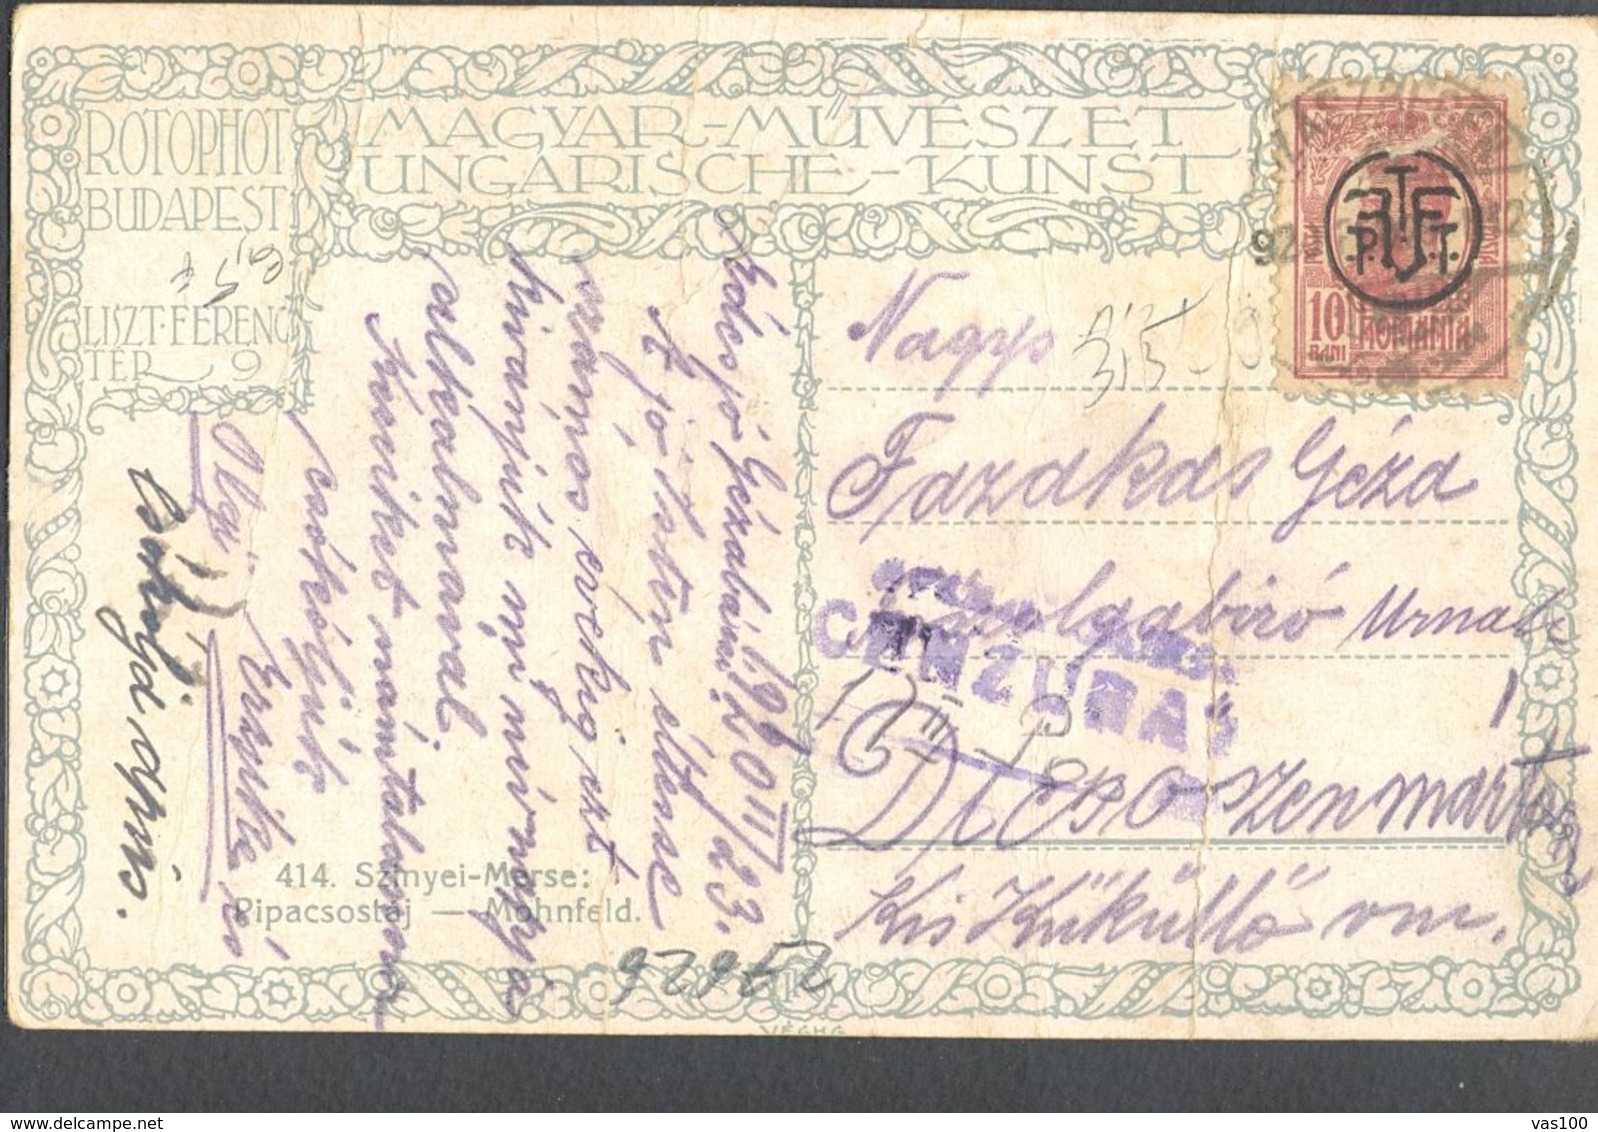 WW1 CENSORSHIP ON SZMYEI- POPPY FIELD PAINTING POSTCARD, 1920, ROMANIA - 1. Weltkrieg (Briefe)